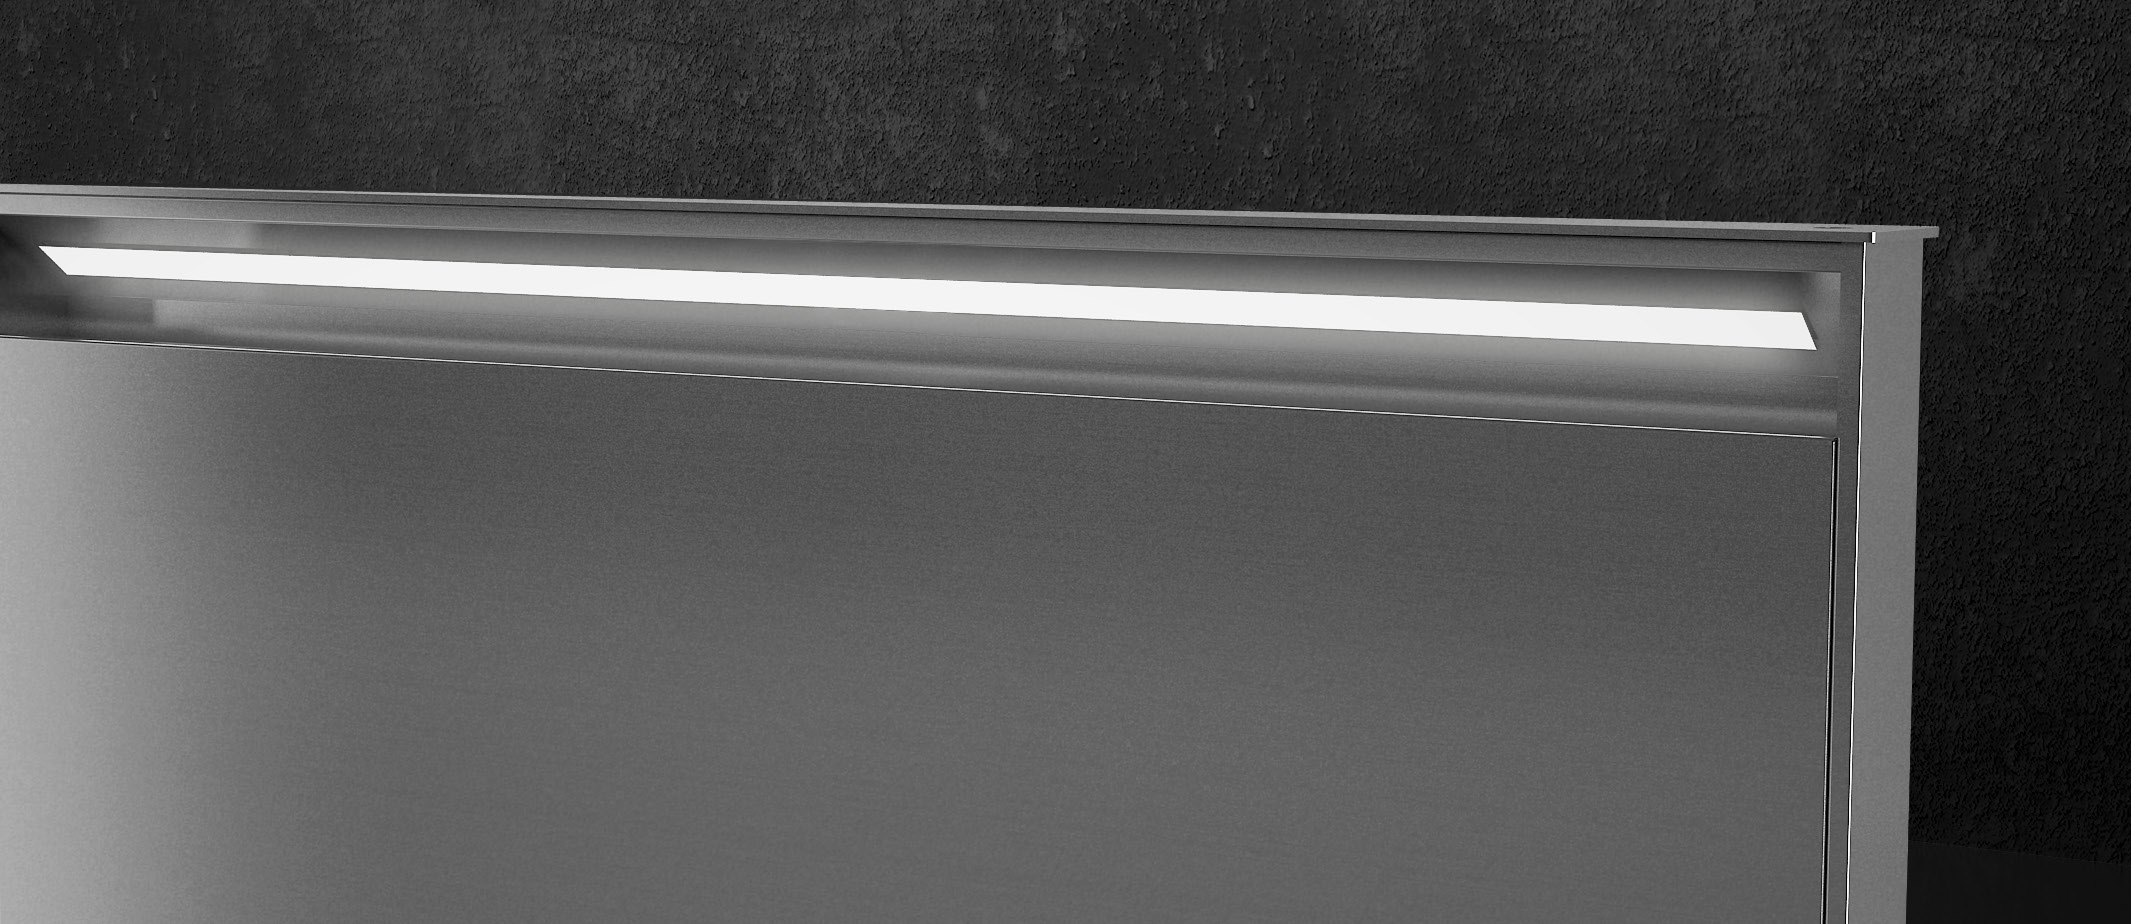 ILLUMINAZIONE LIGHTING Lampade led: colore luce bianca, alta efficienza energetica, bassi consumi, basse temperature di esercizio, massima affidabilità nel